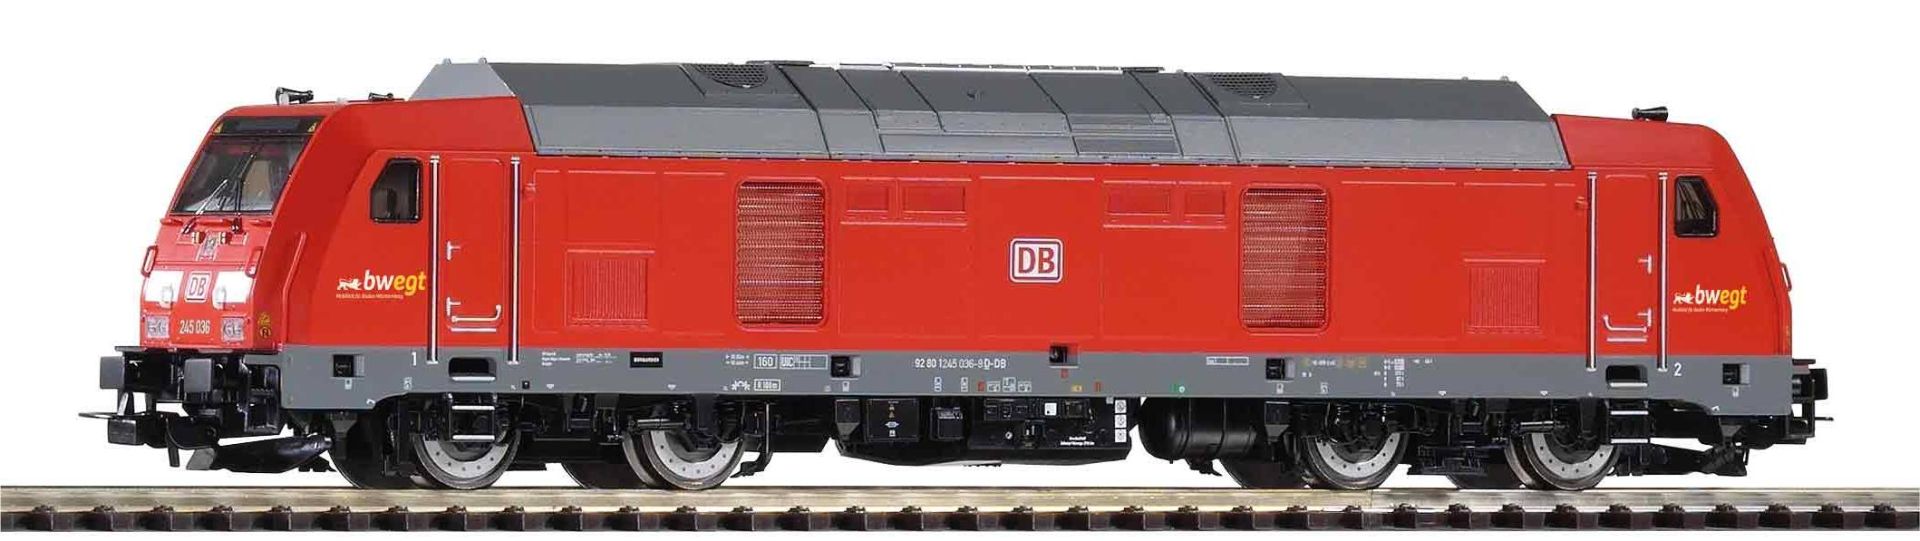 Piko 52525 - Diesellok BR 245 bwegt, DBAG, Ep.VI